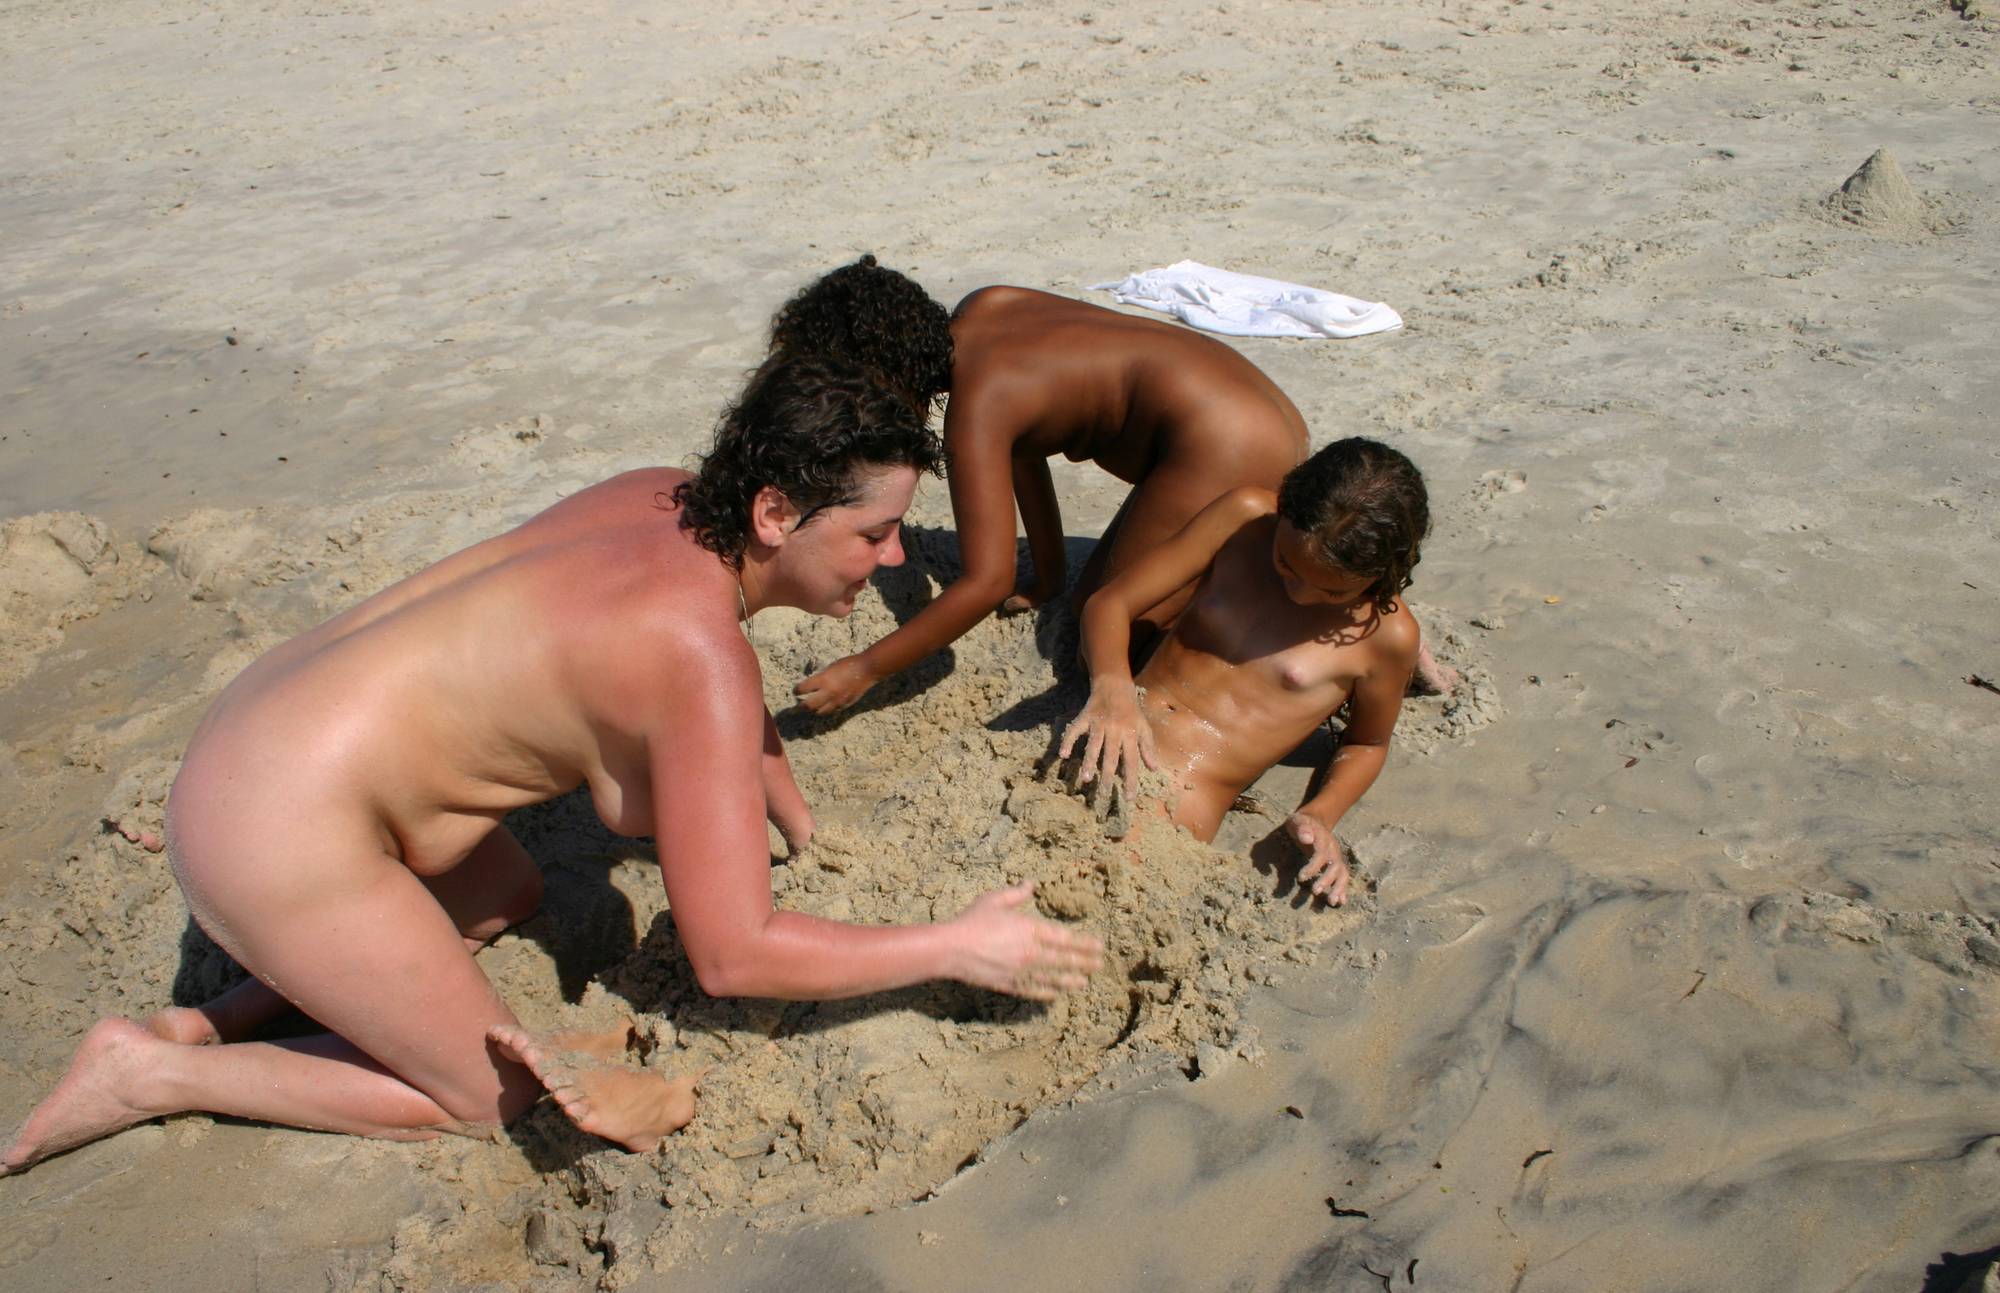 Brazilian Buried in Sands - 1